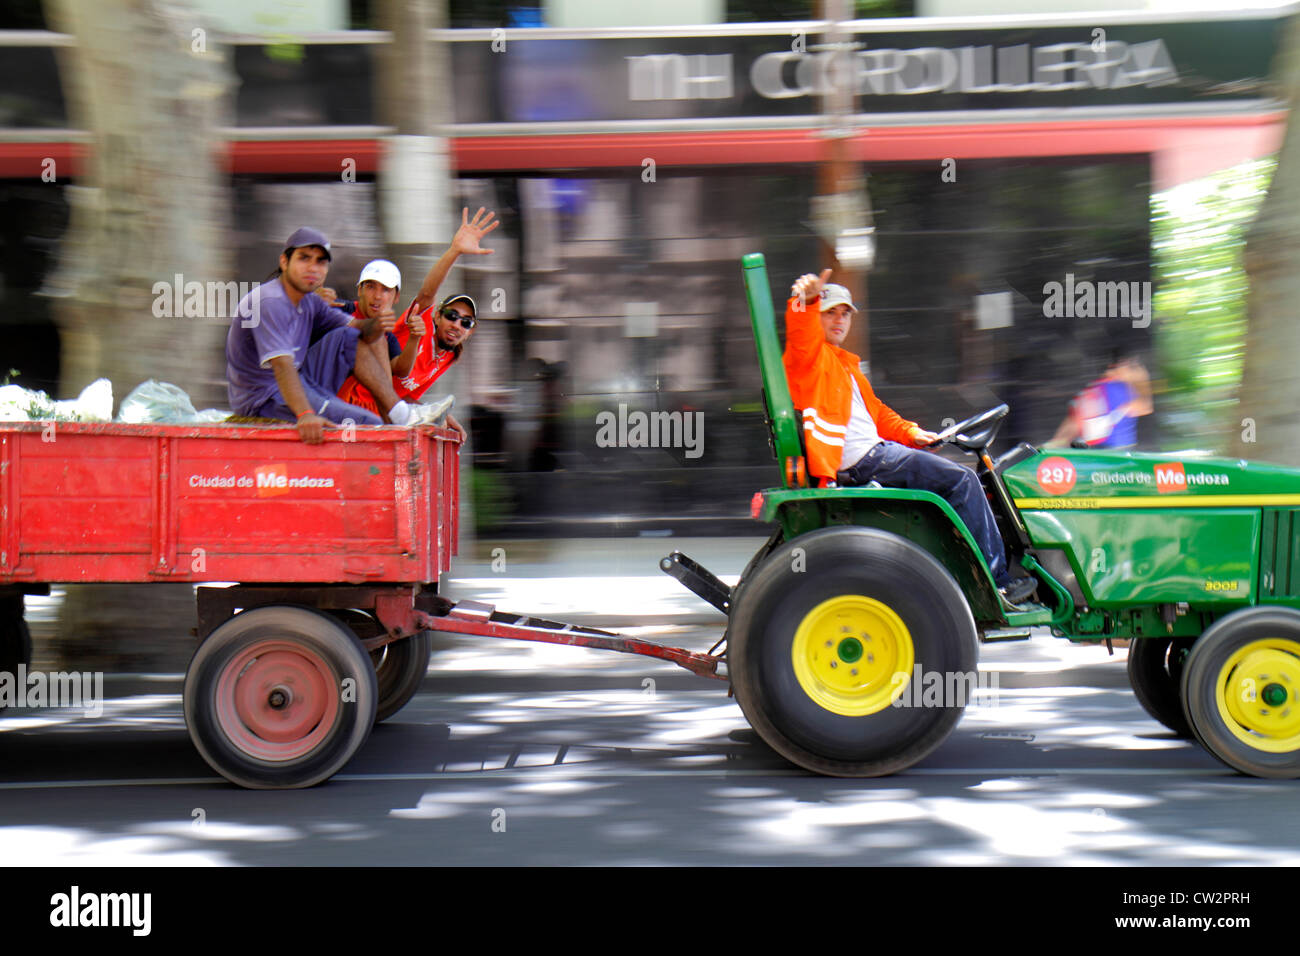 Mendoza Argentina,Avenida Espana,tractor,pulling cart,city worker,workers,public employee,laborer,Hispanic man men male adult adults,wheel,waving,tran Stock Photo